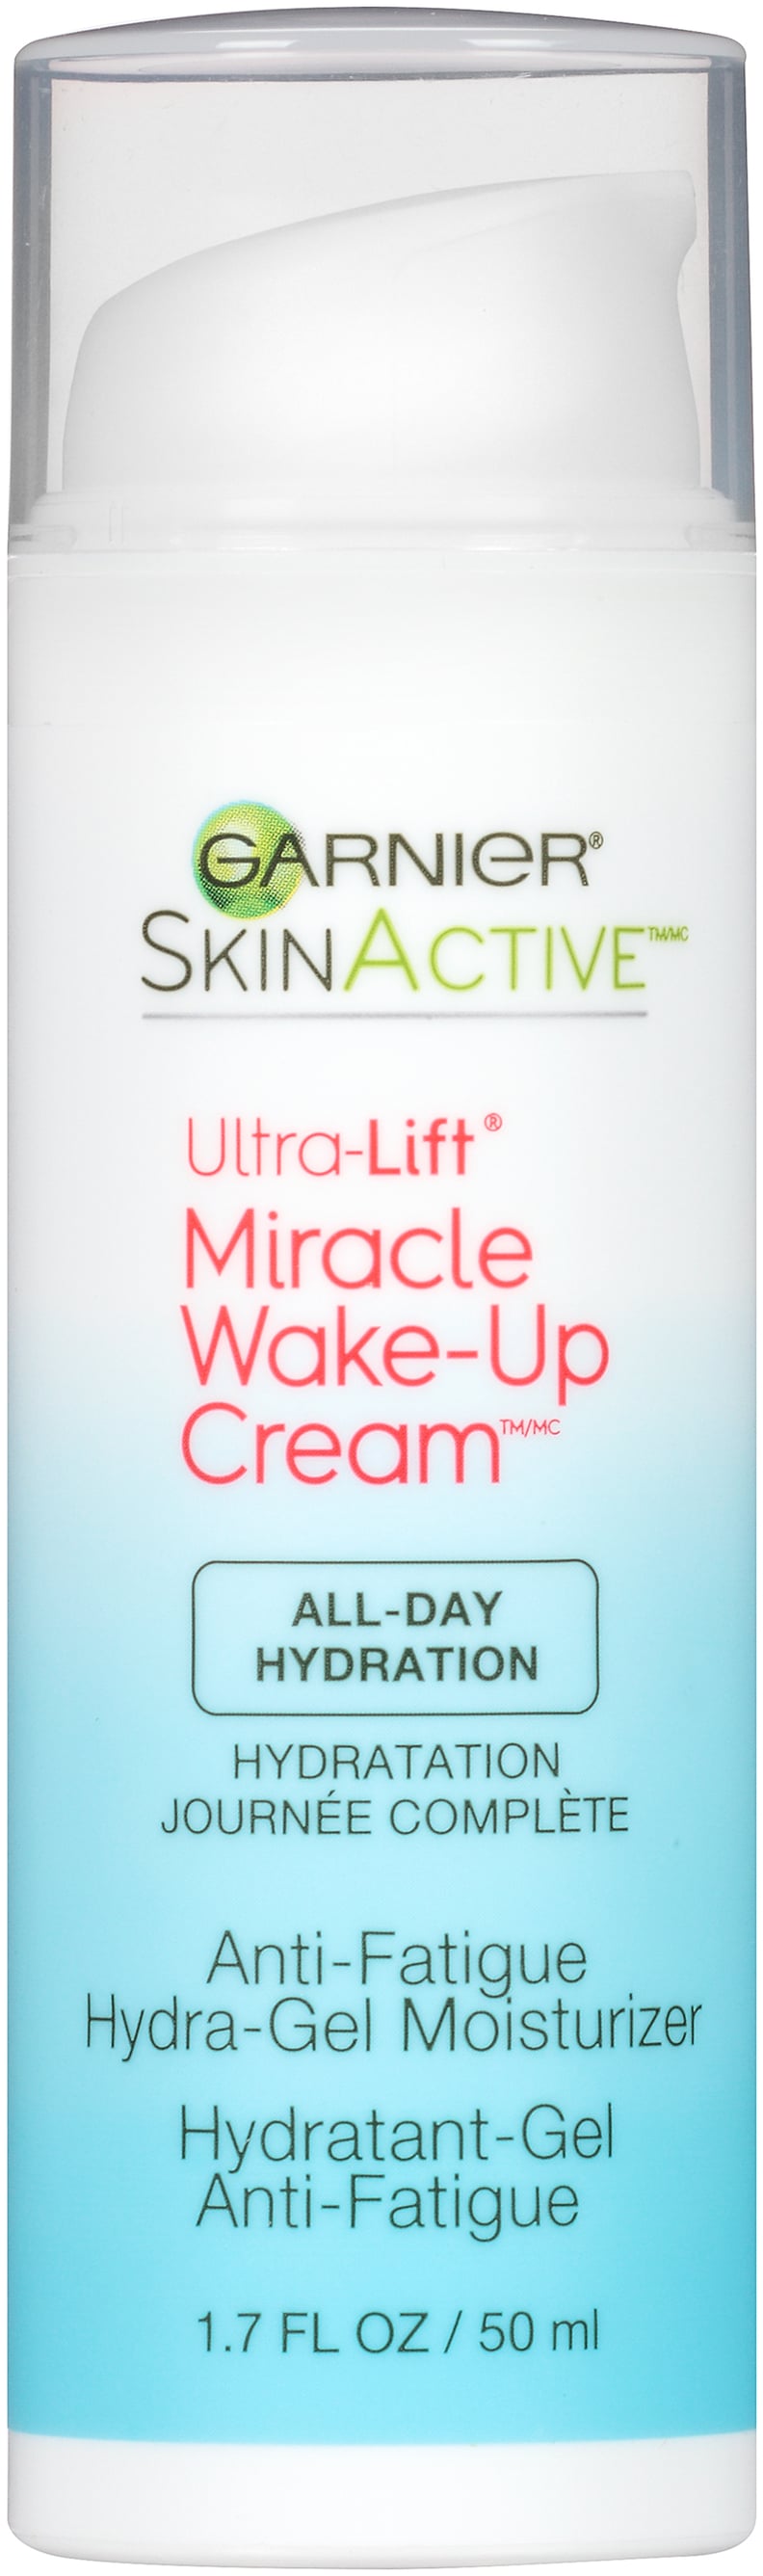 Garnier SkinActive Miracle Anti-Fatigue Wake-Up Hydra-Gel Moisturizer